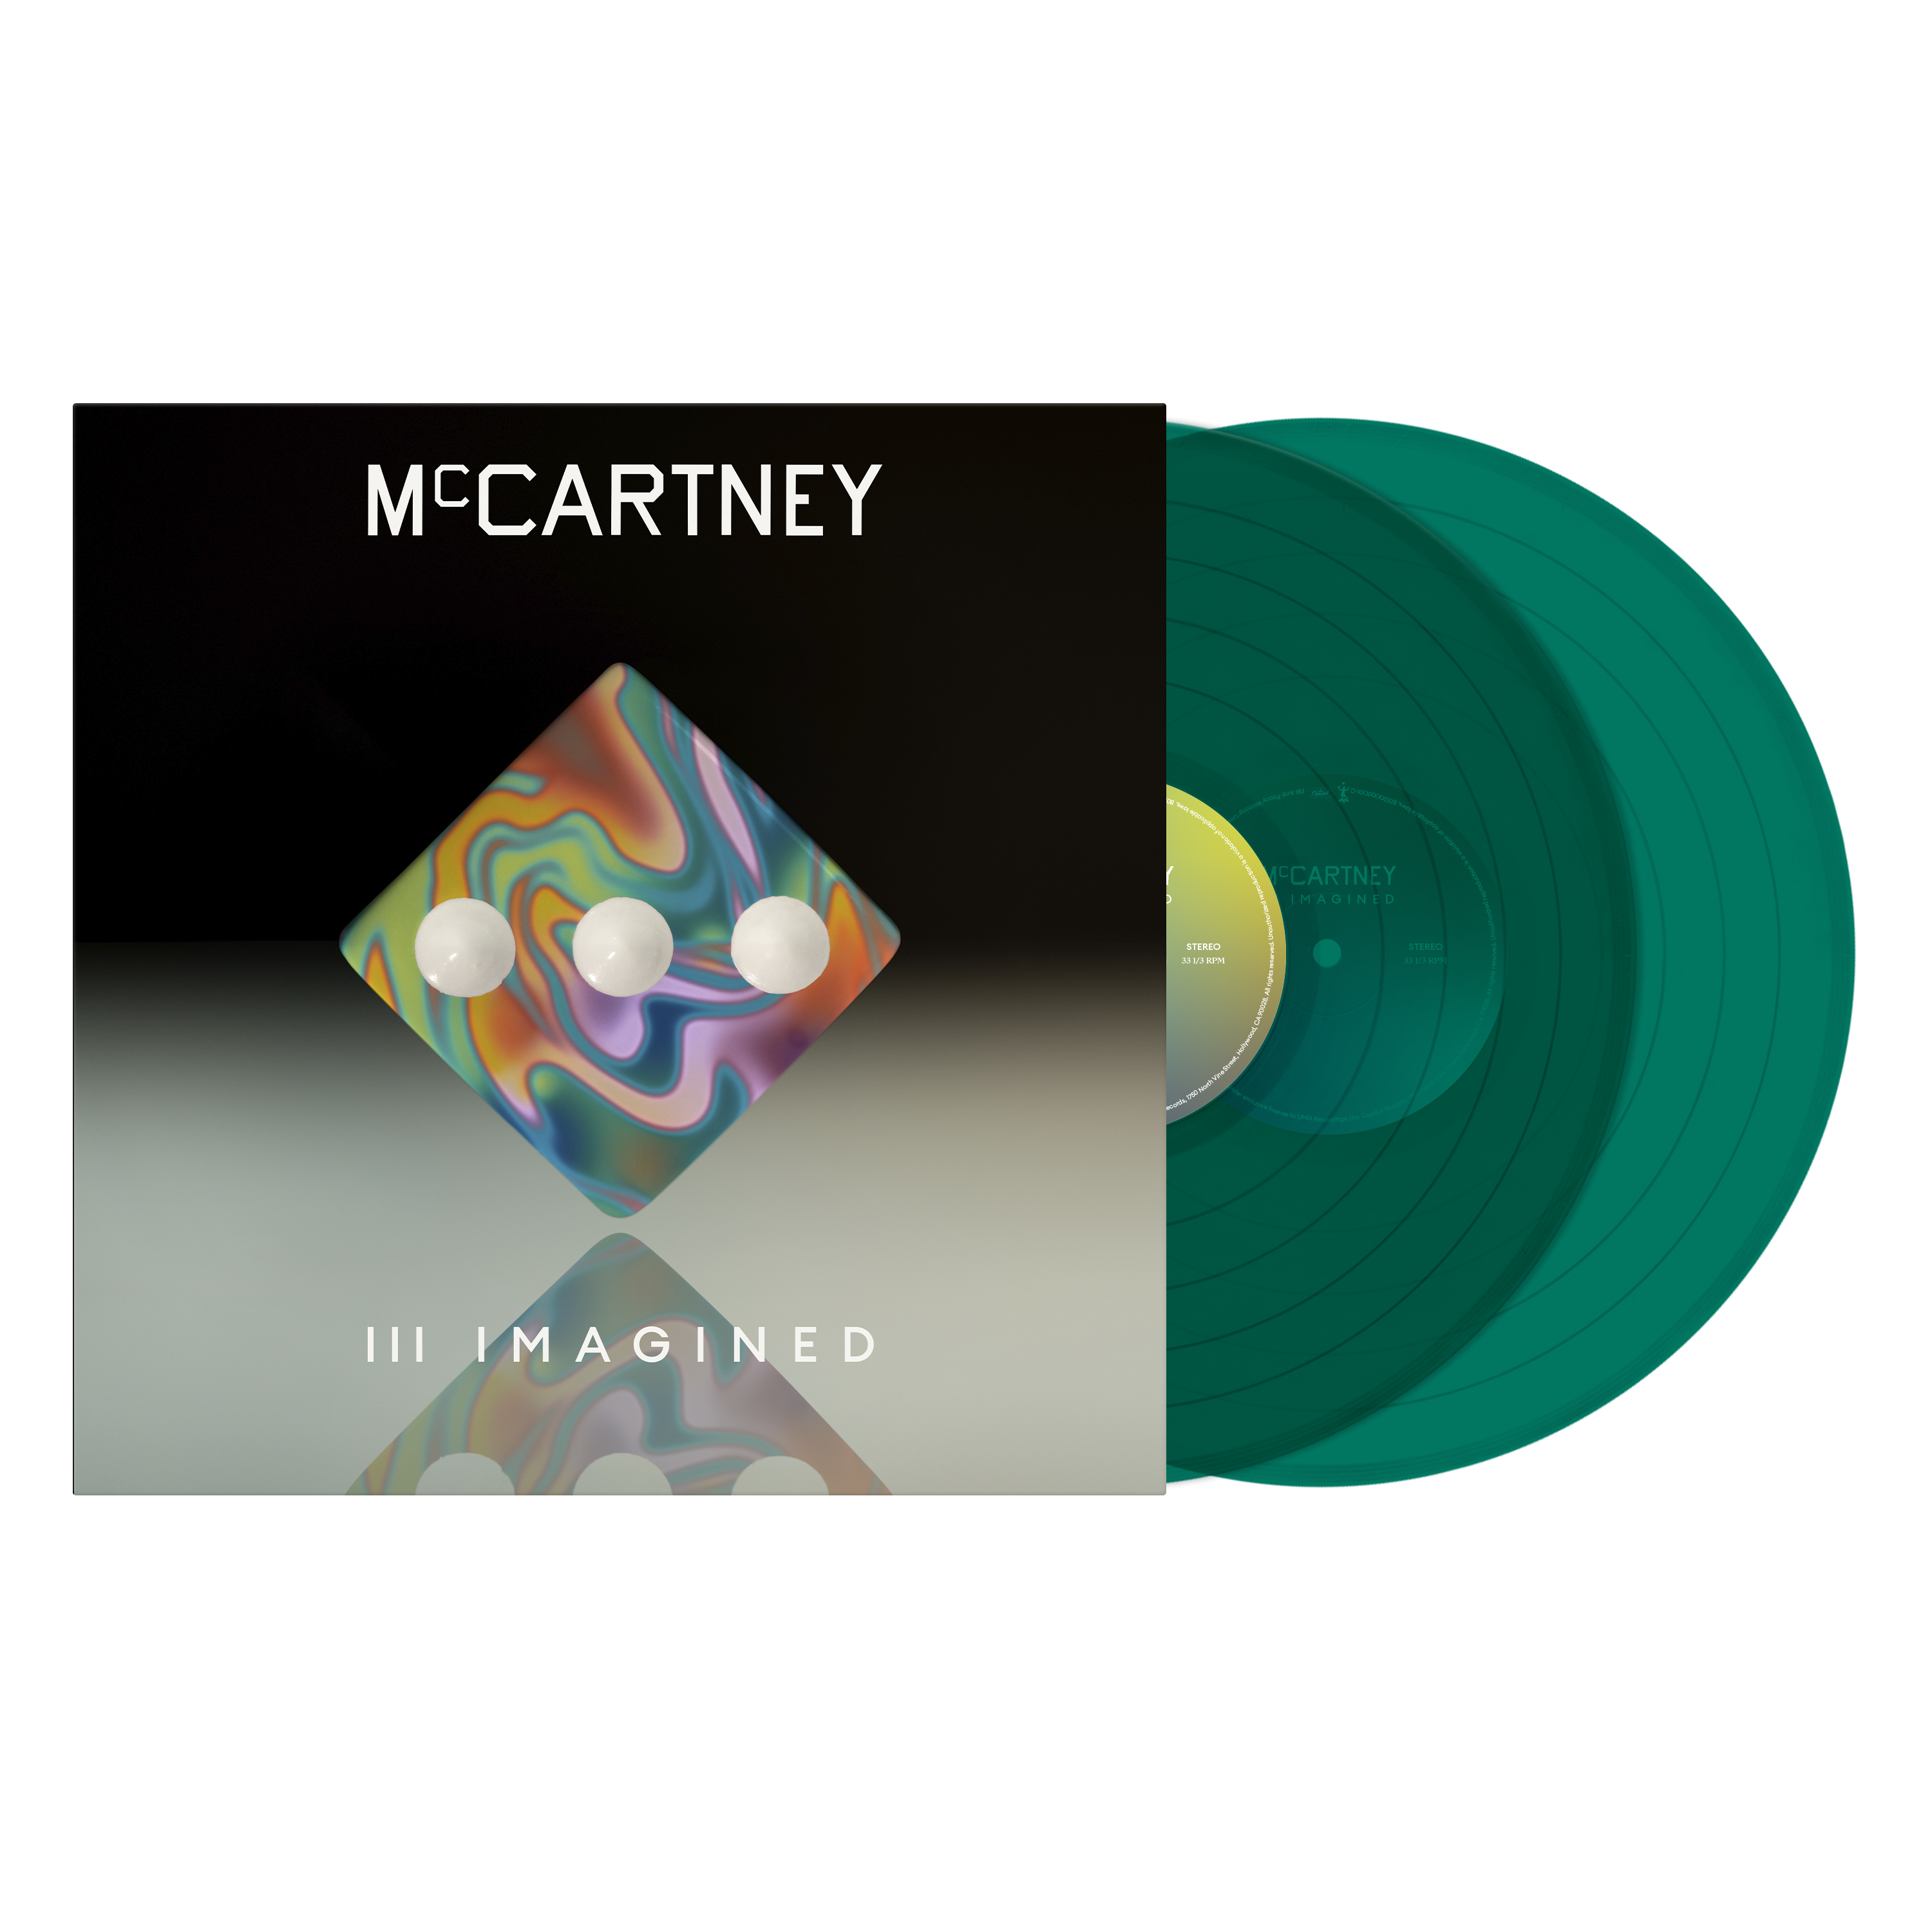 Paul McCartney - McCartney III Imagined: Limited Transparent Dark Green Vinyl 2LP